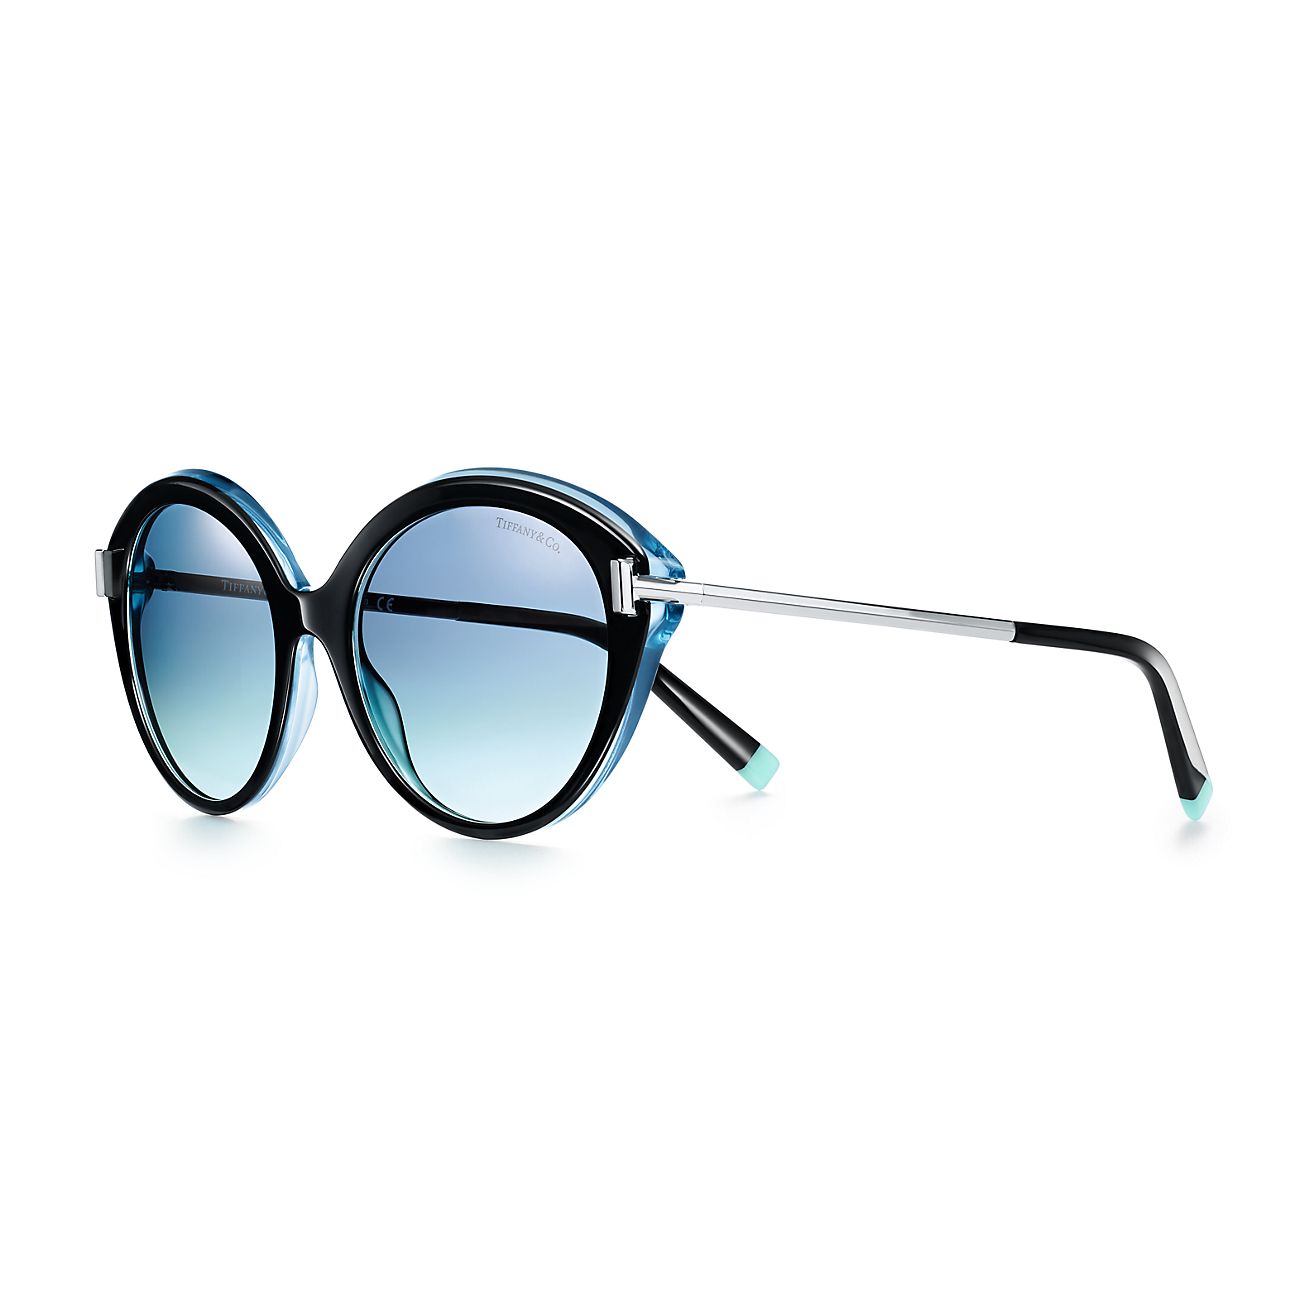 tiffany 1837 round sunglasses